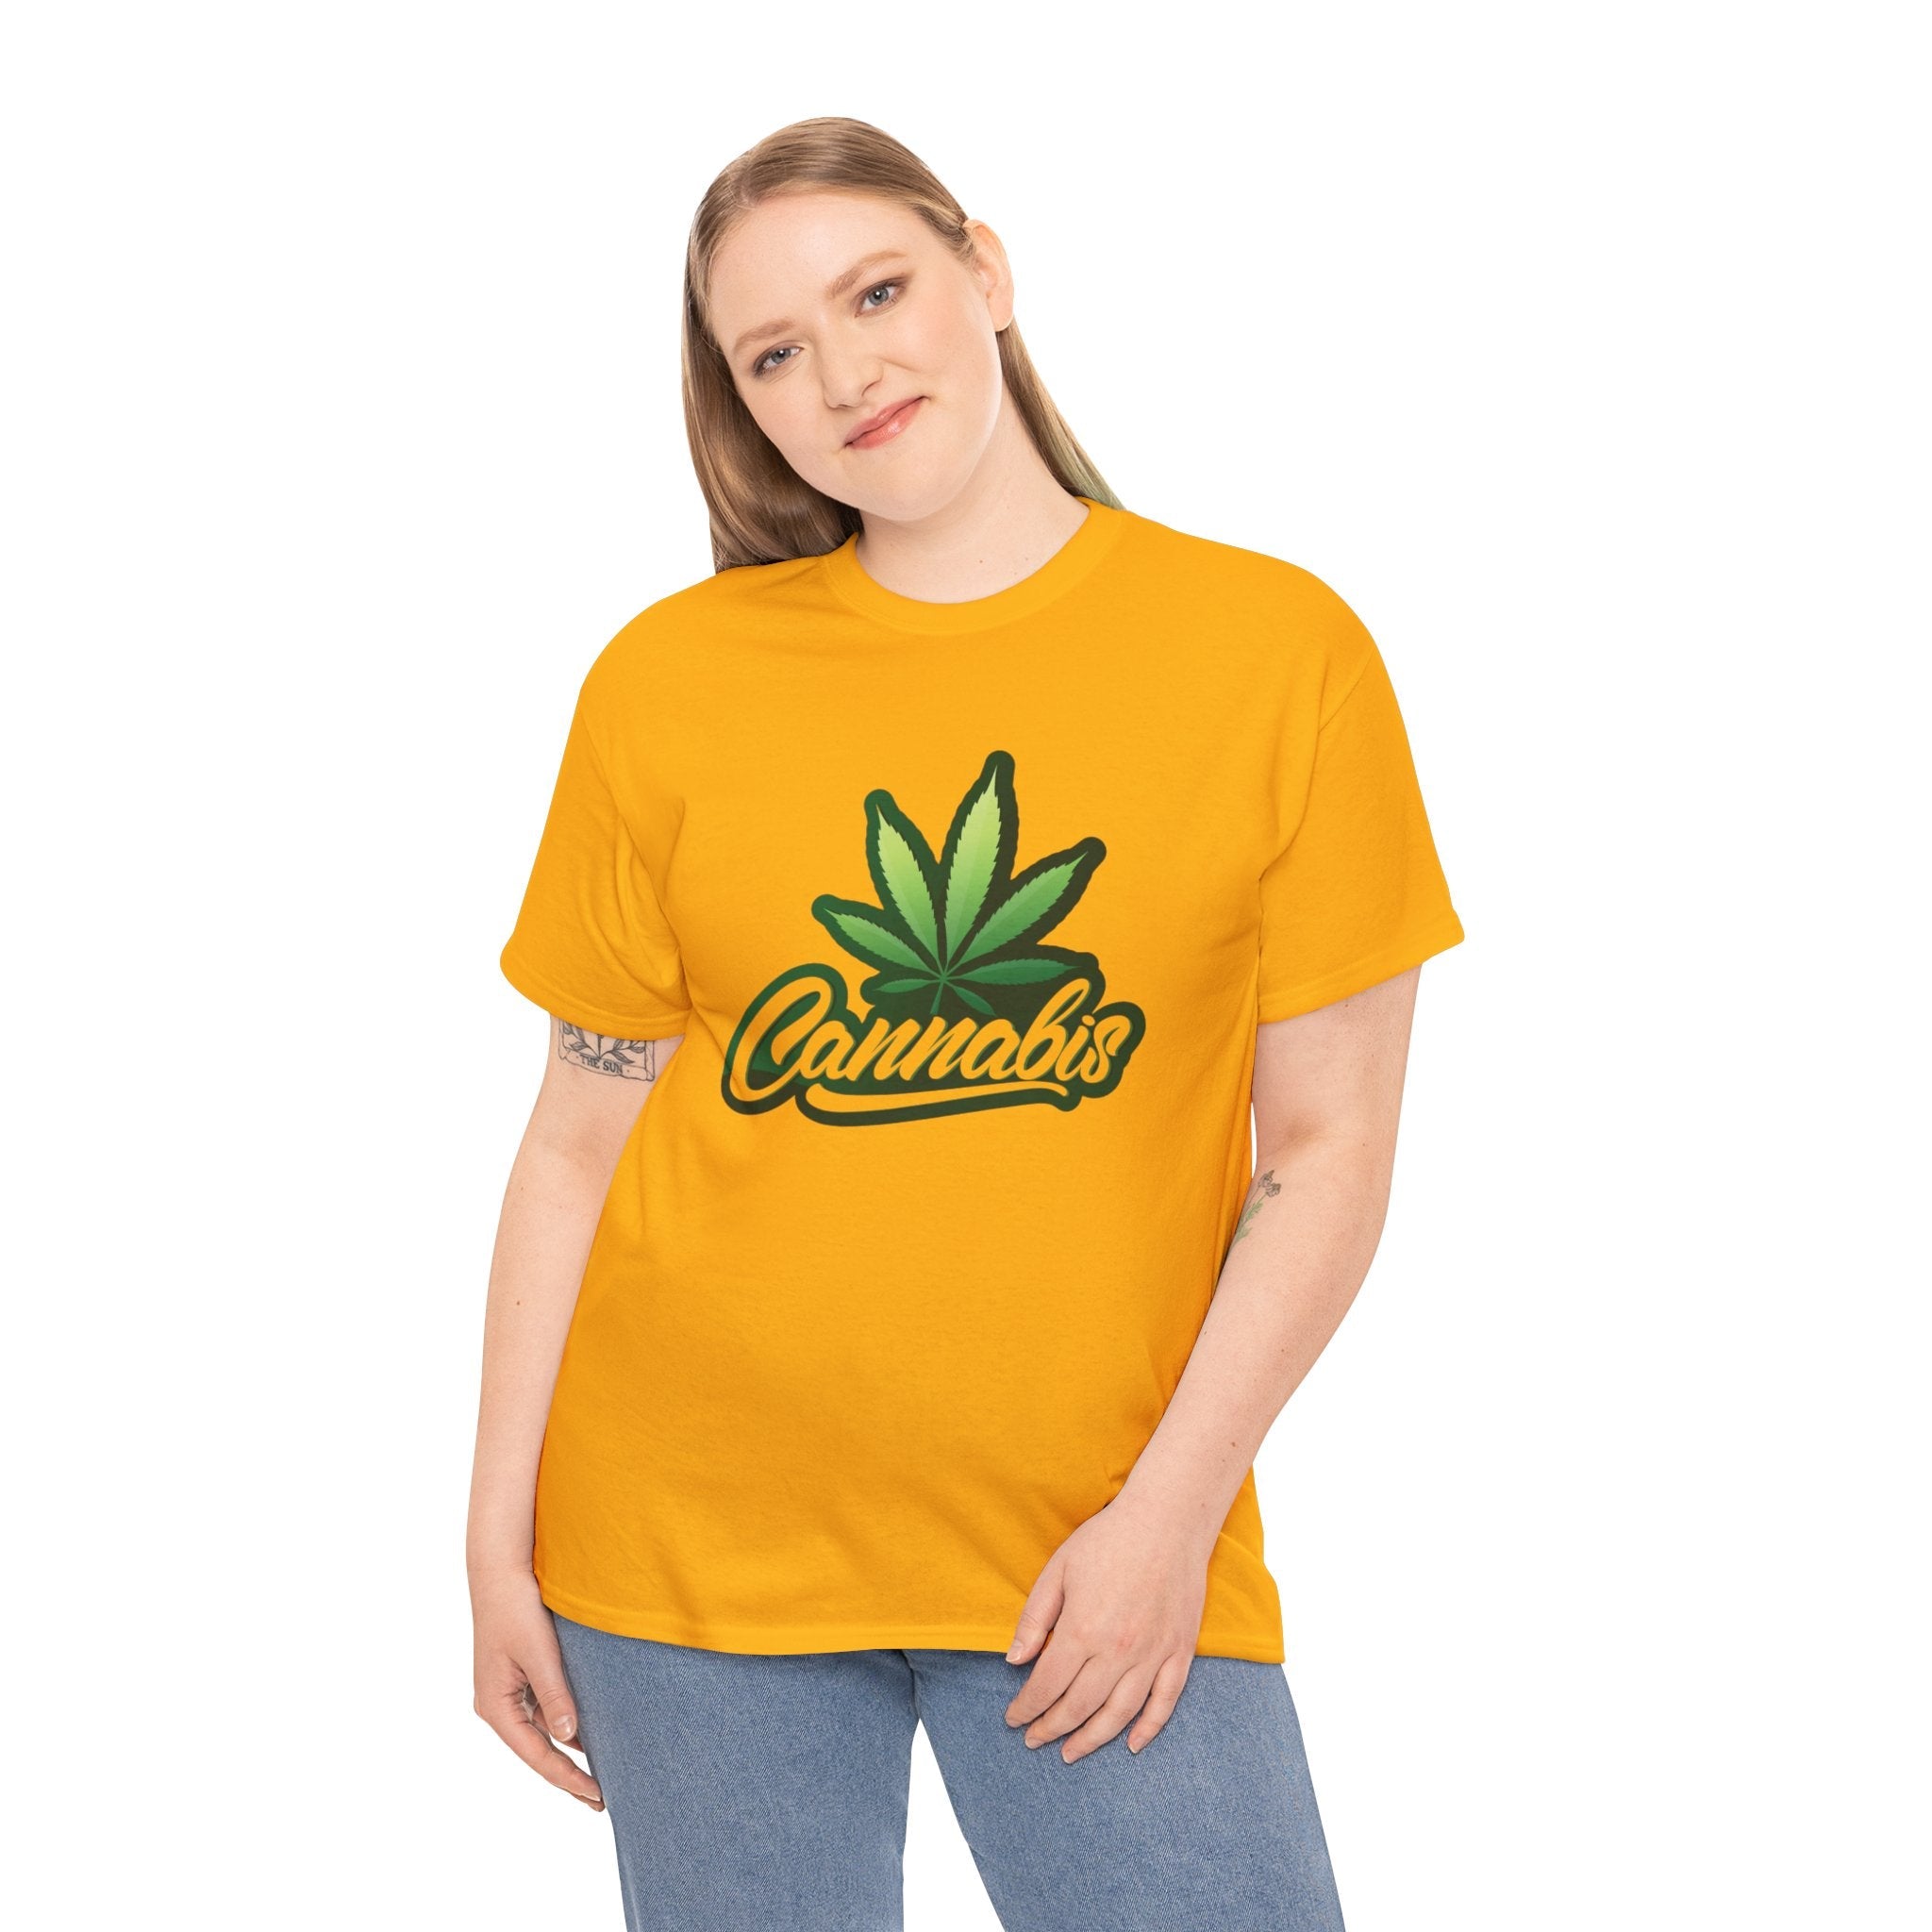 Cannabis Not A Drug Logo  Tee - TRU2 Clothing